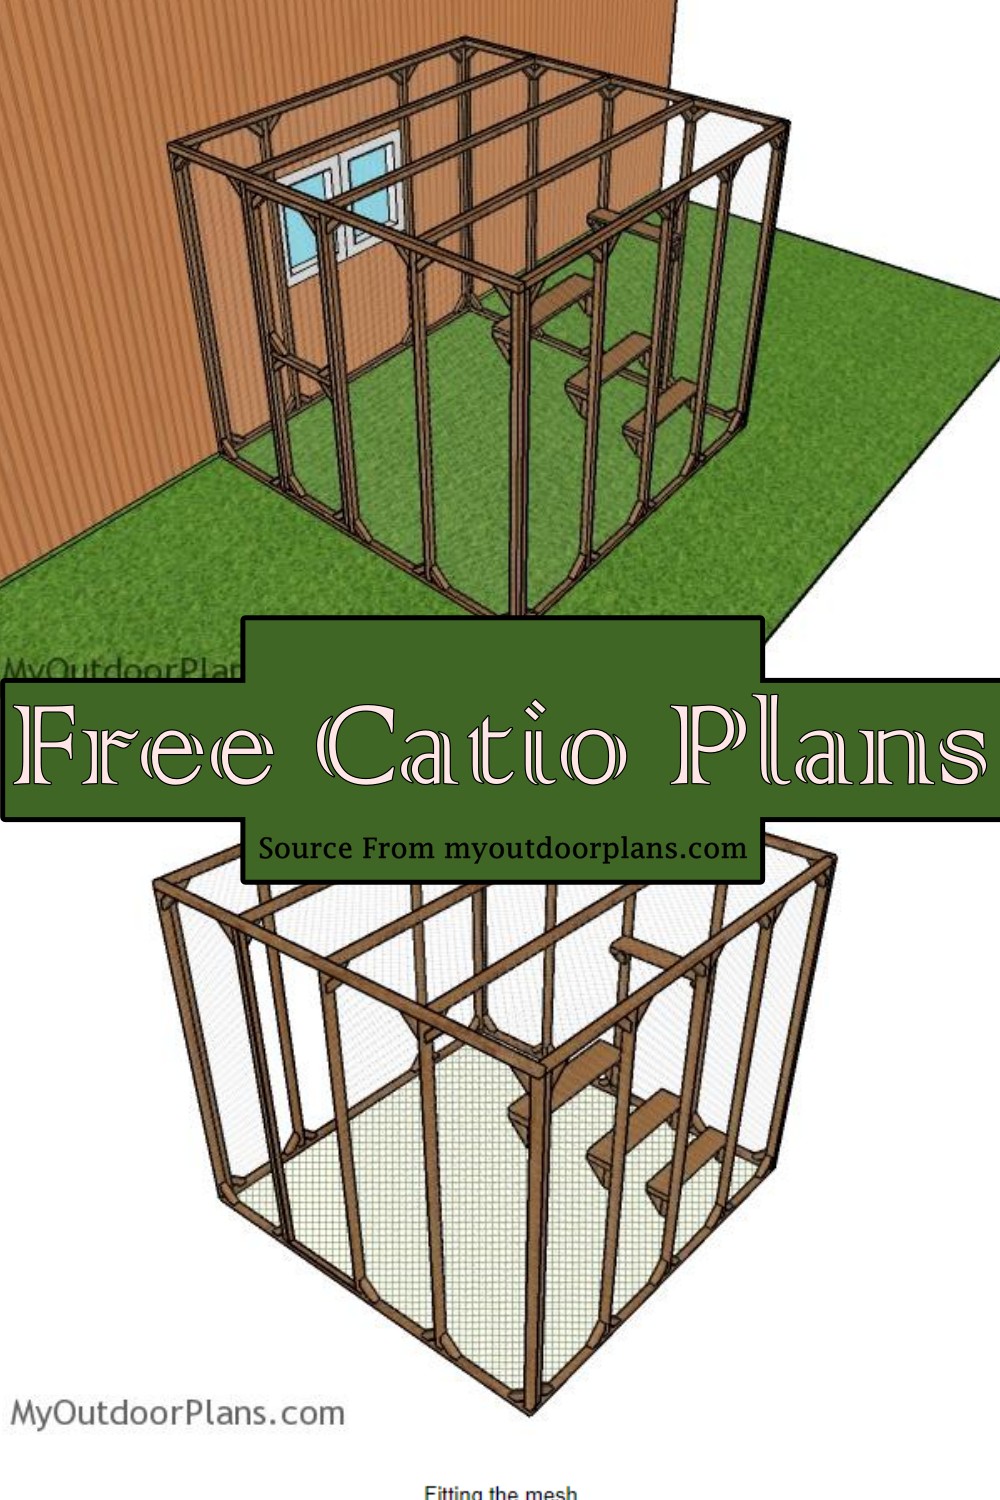 Free Catio Plans